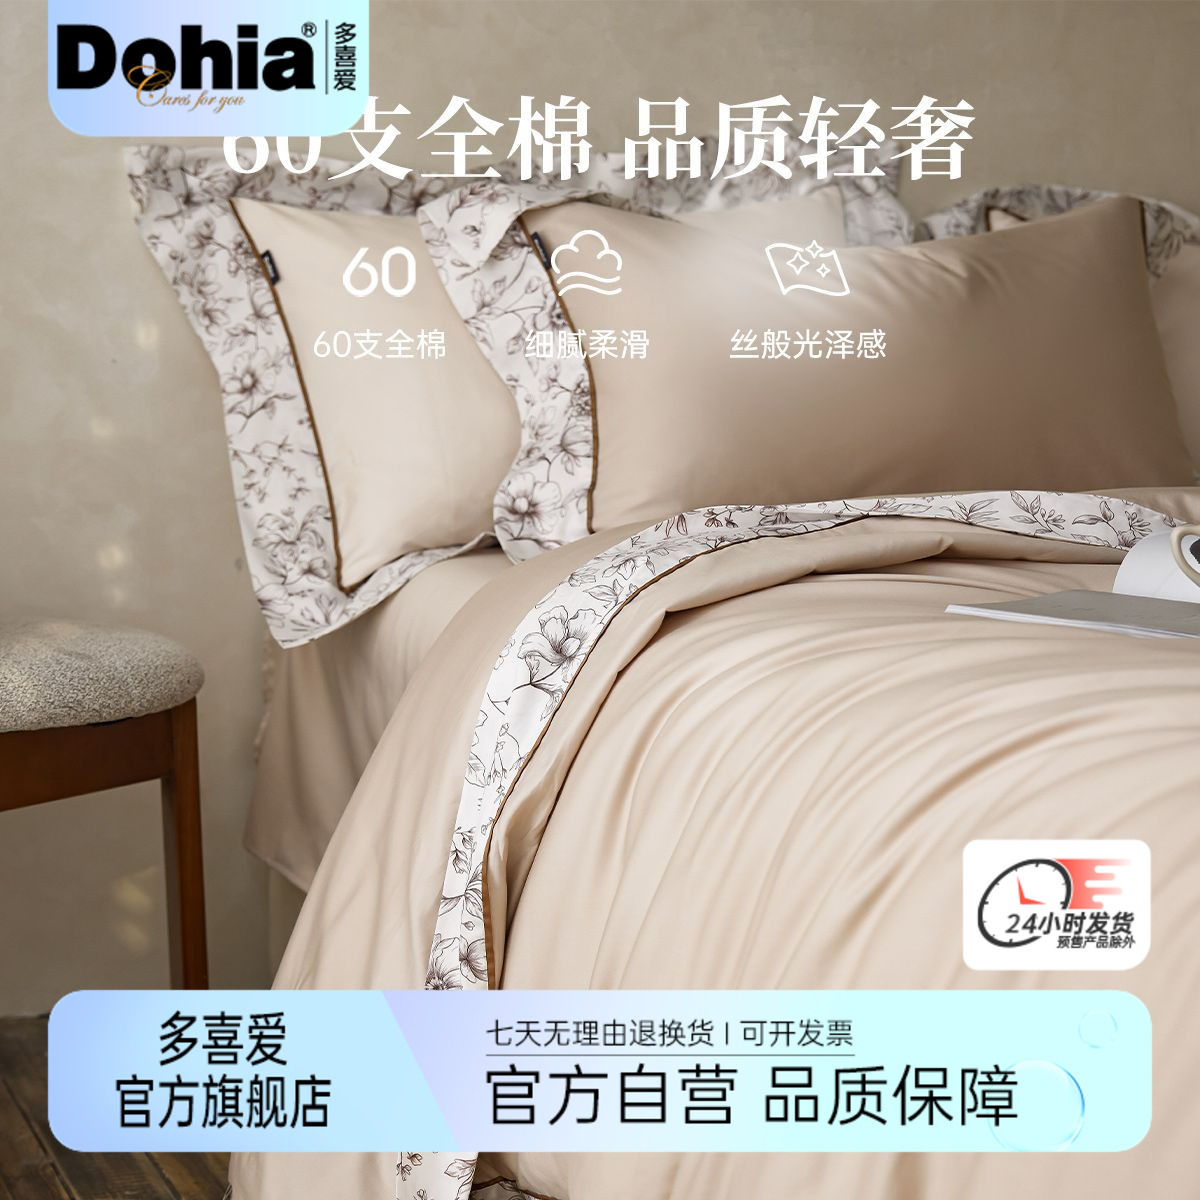 Dohia 多喜爱 60支高奢四件套纯棉轻奢被套床单法式复古风床上用品庄园 444.51